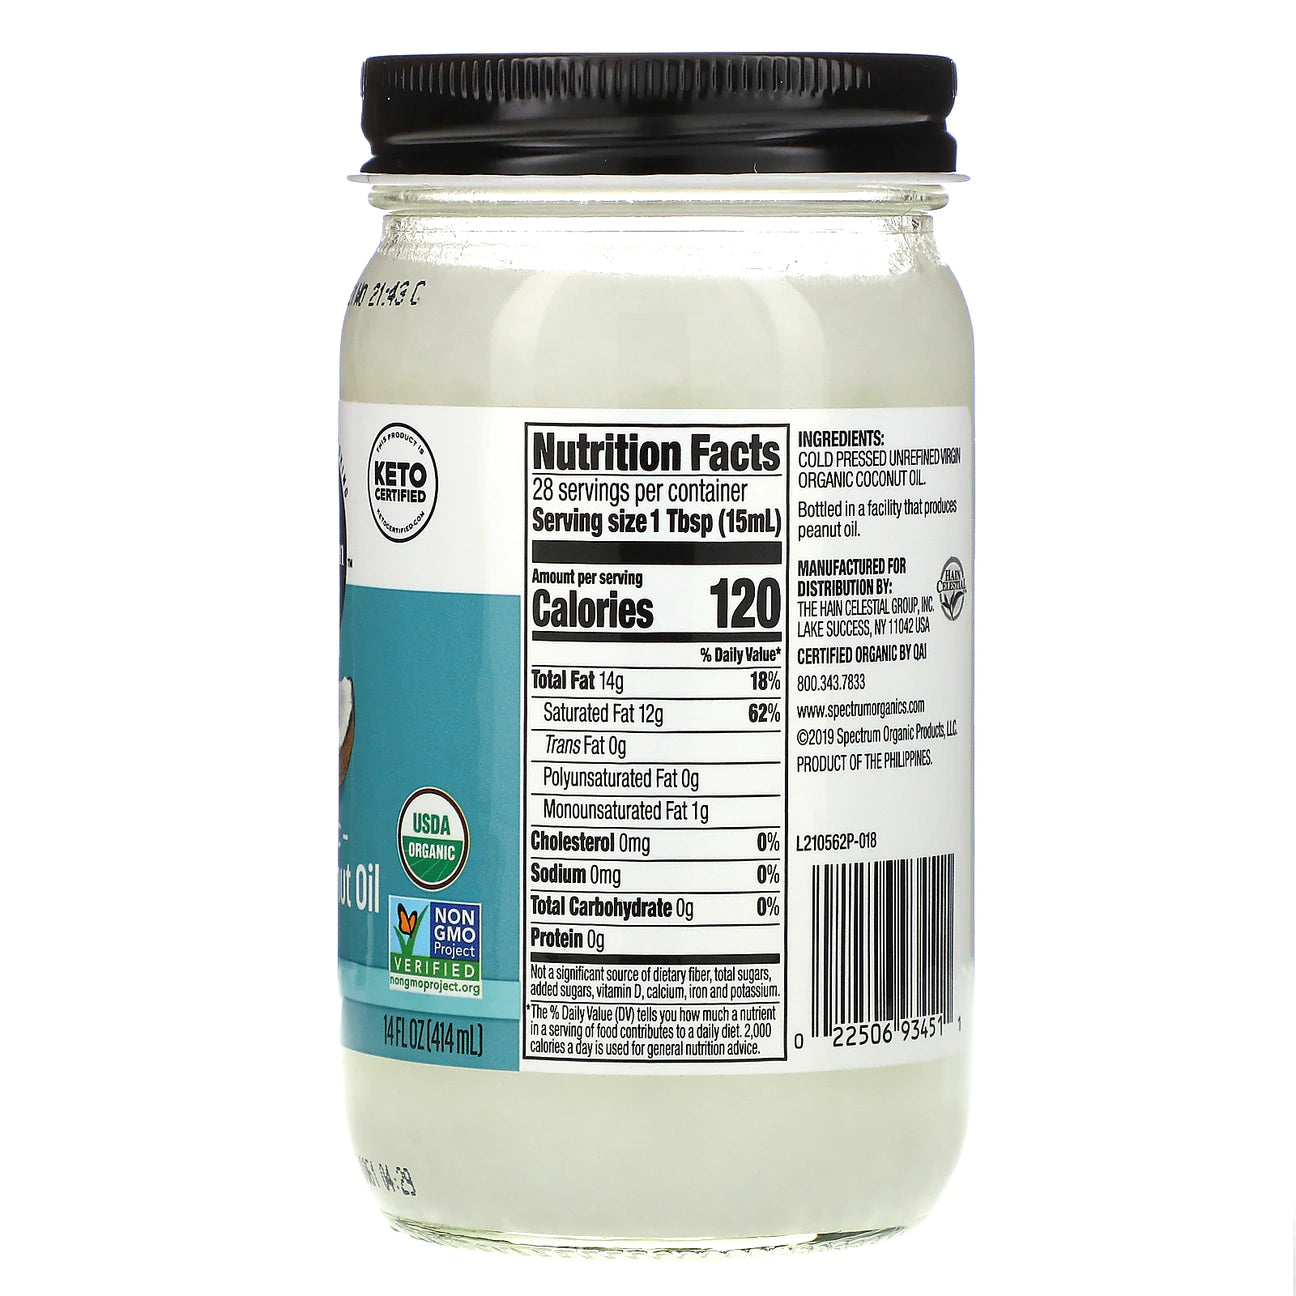 Spectrum Culinary, Organic Virgin Coconut Oil, Unrefined, 14 fl oz